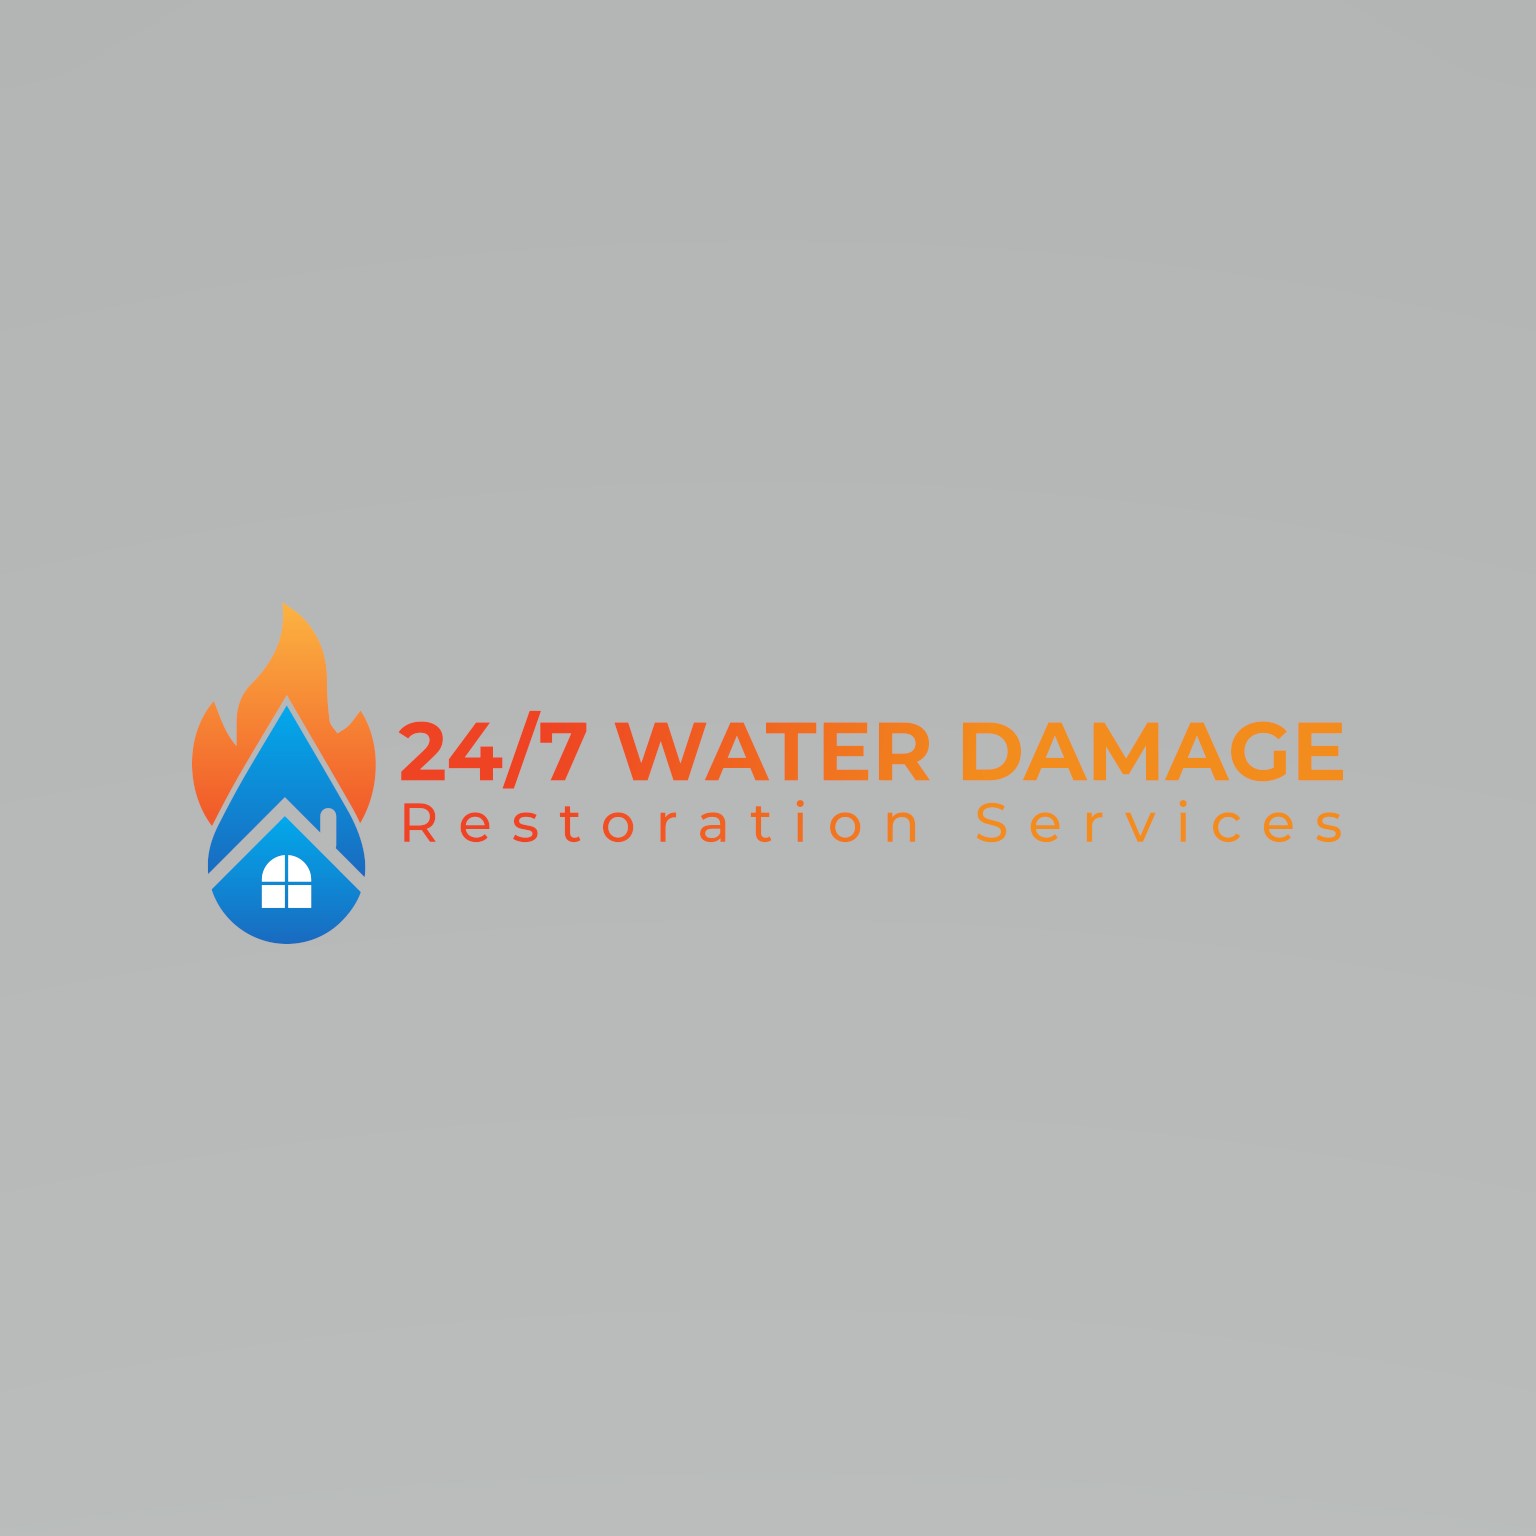 24/7 Water Damage Restoration Services of Pembroke Pines's Logo